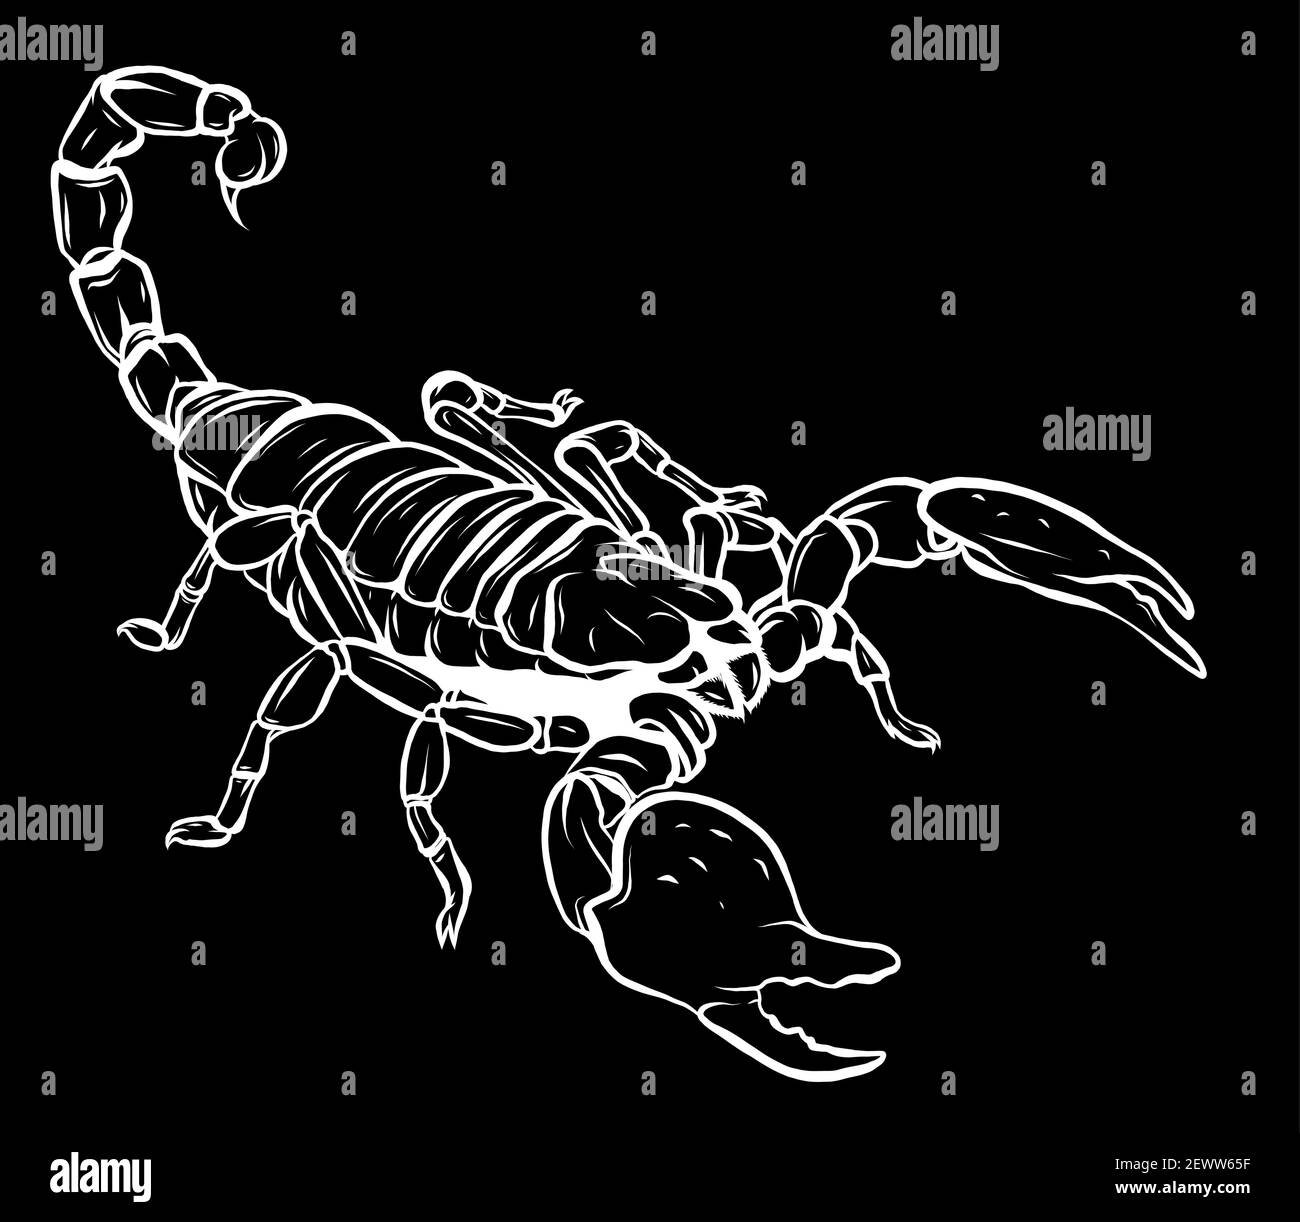 Silhouette Illustration von Skorpion Arachnid Insekt. vektor-Grafik Stock Vektor